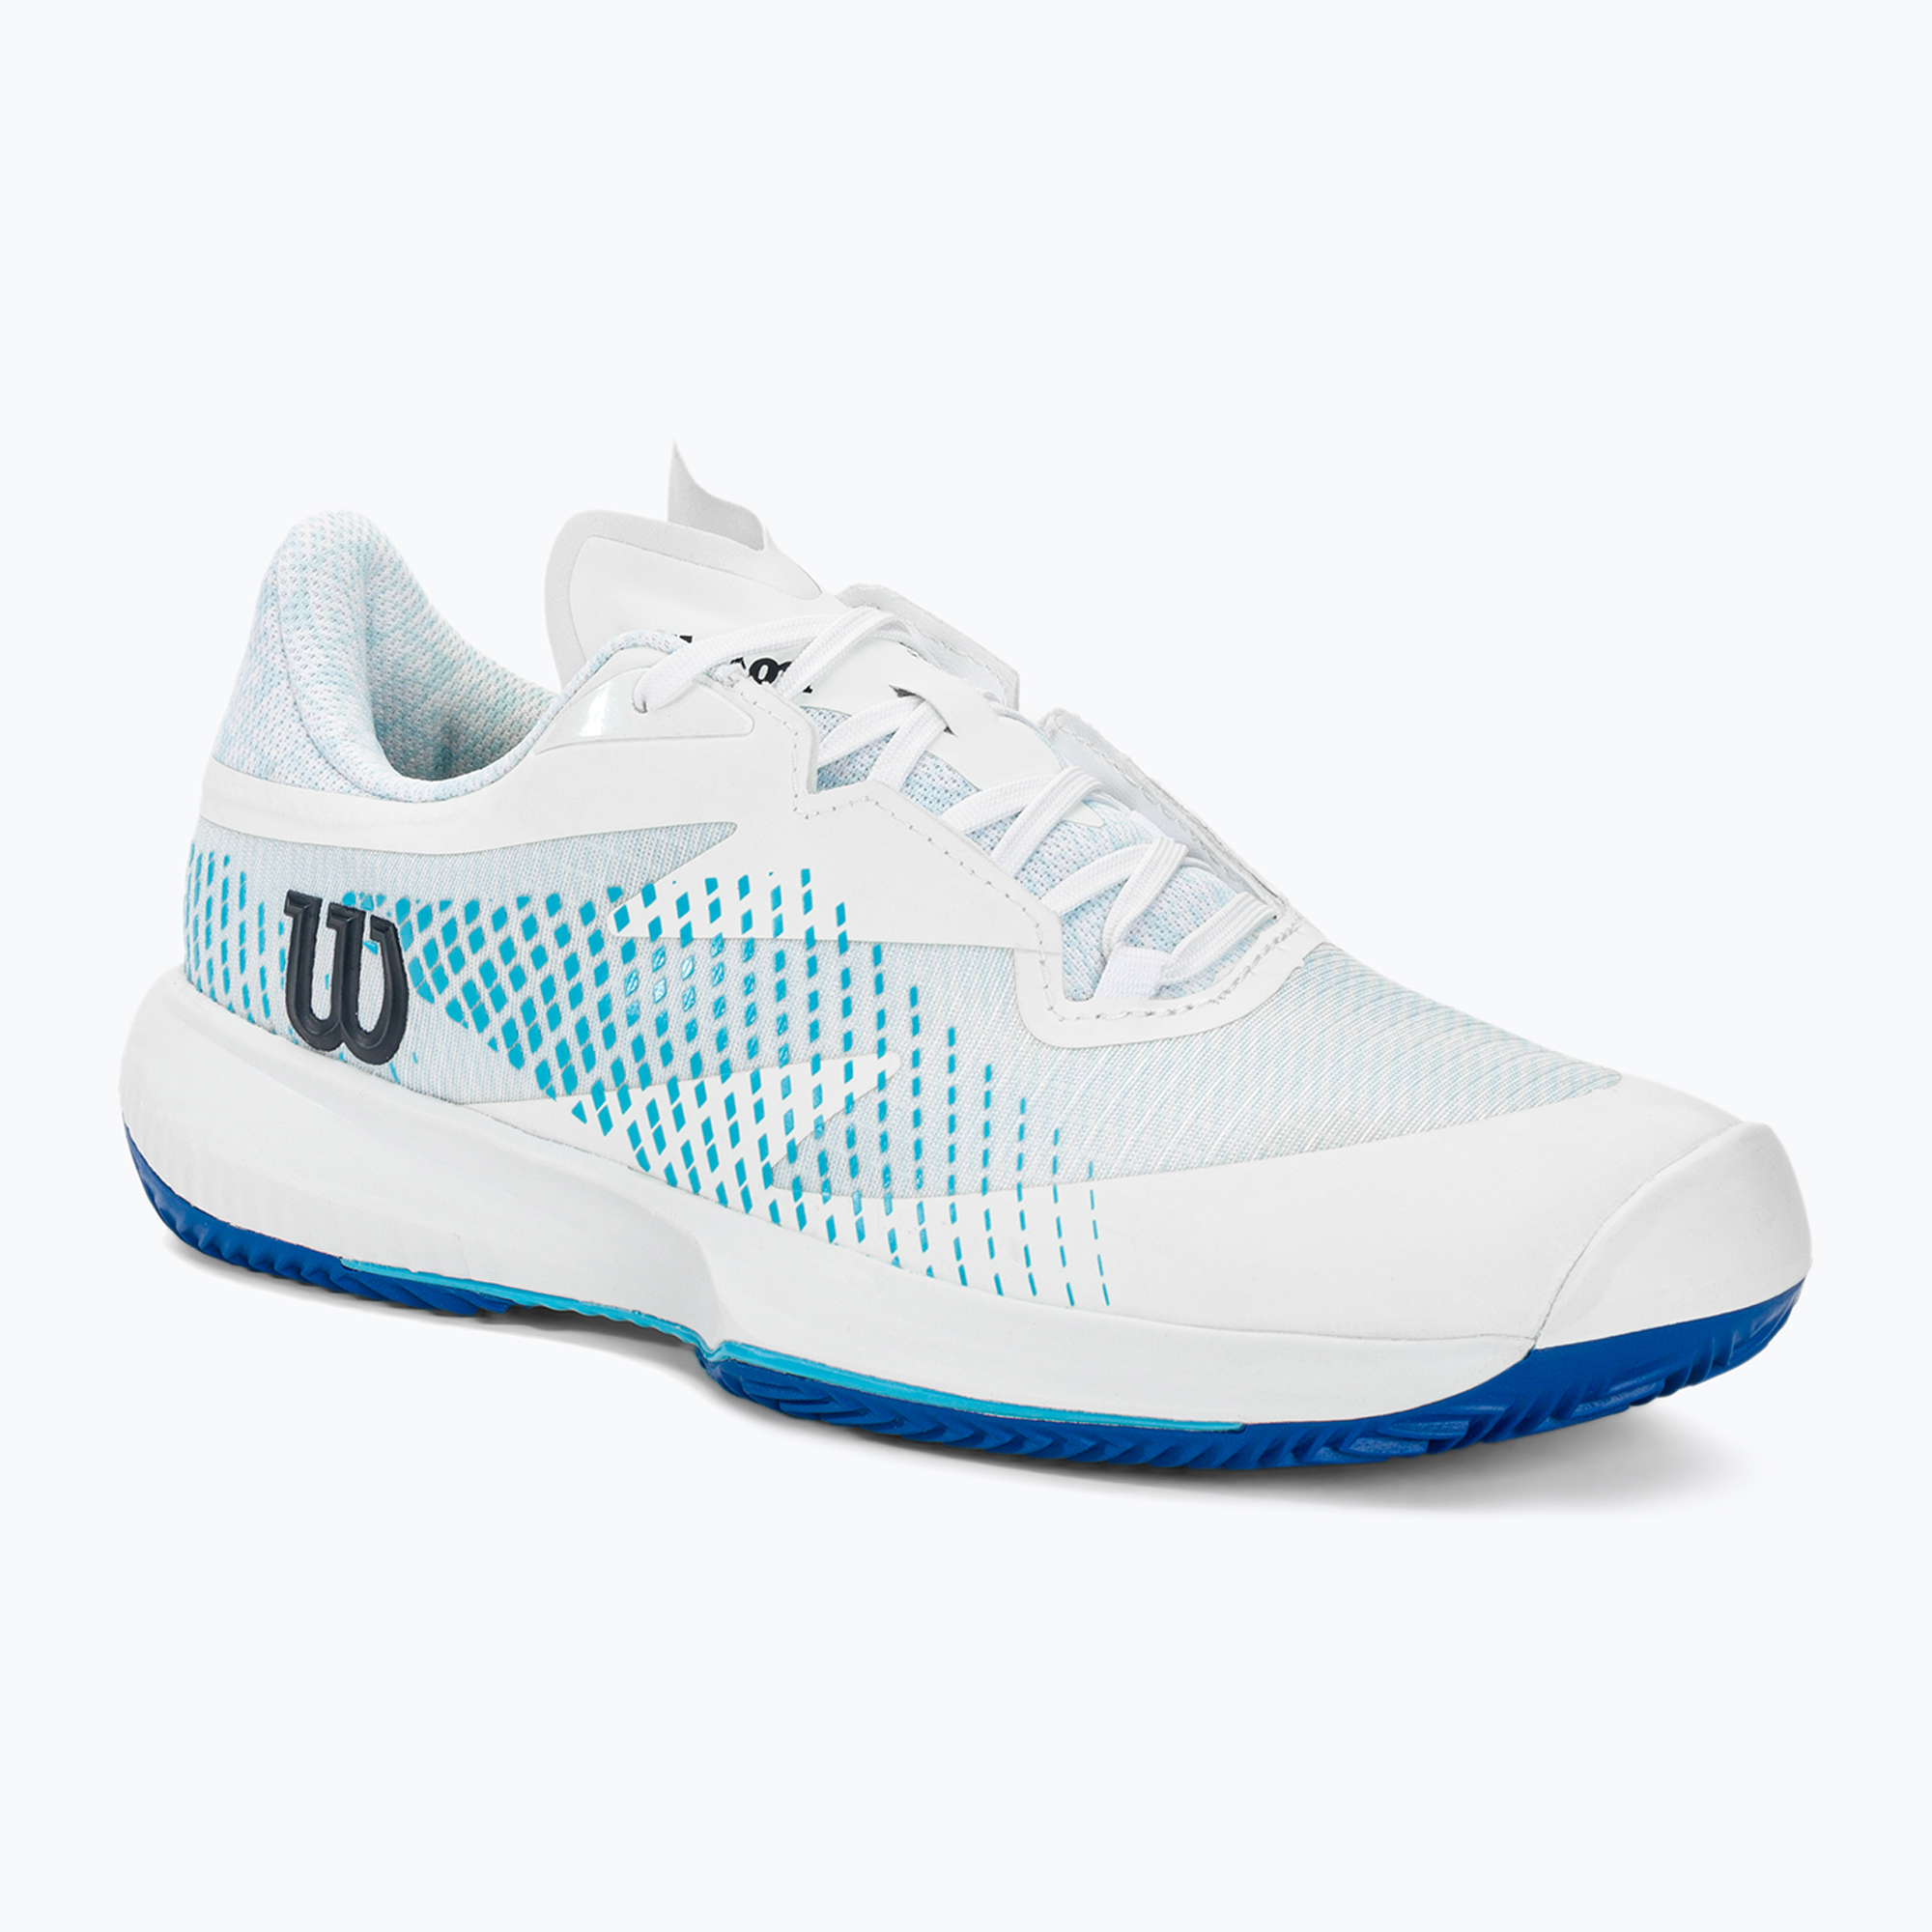 Pánska tenisová obuv Wilson Kaos Swift 1.5 Clay white/blue atoll/lapis blue